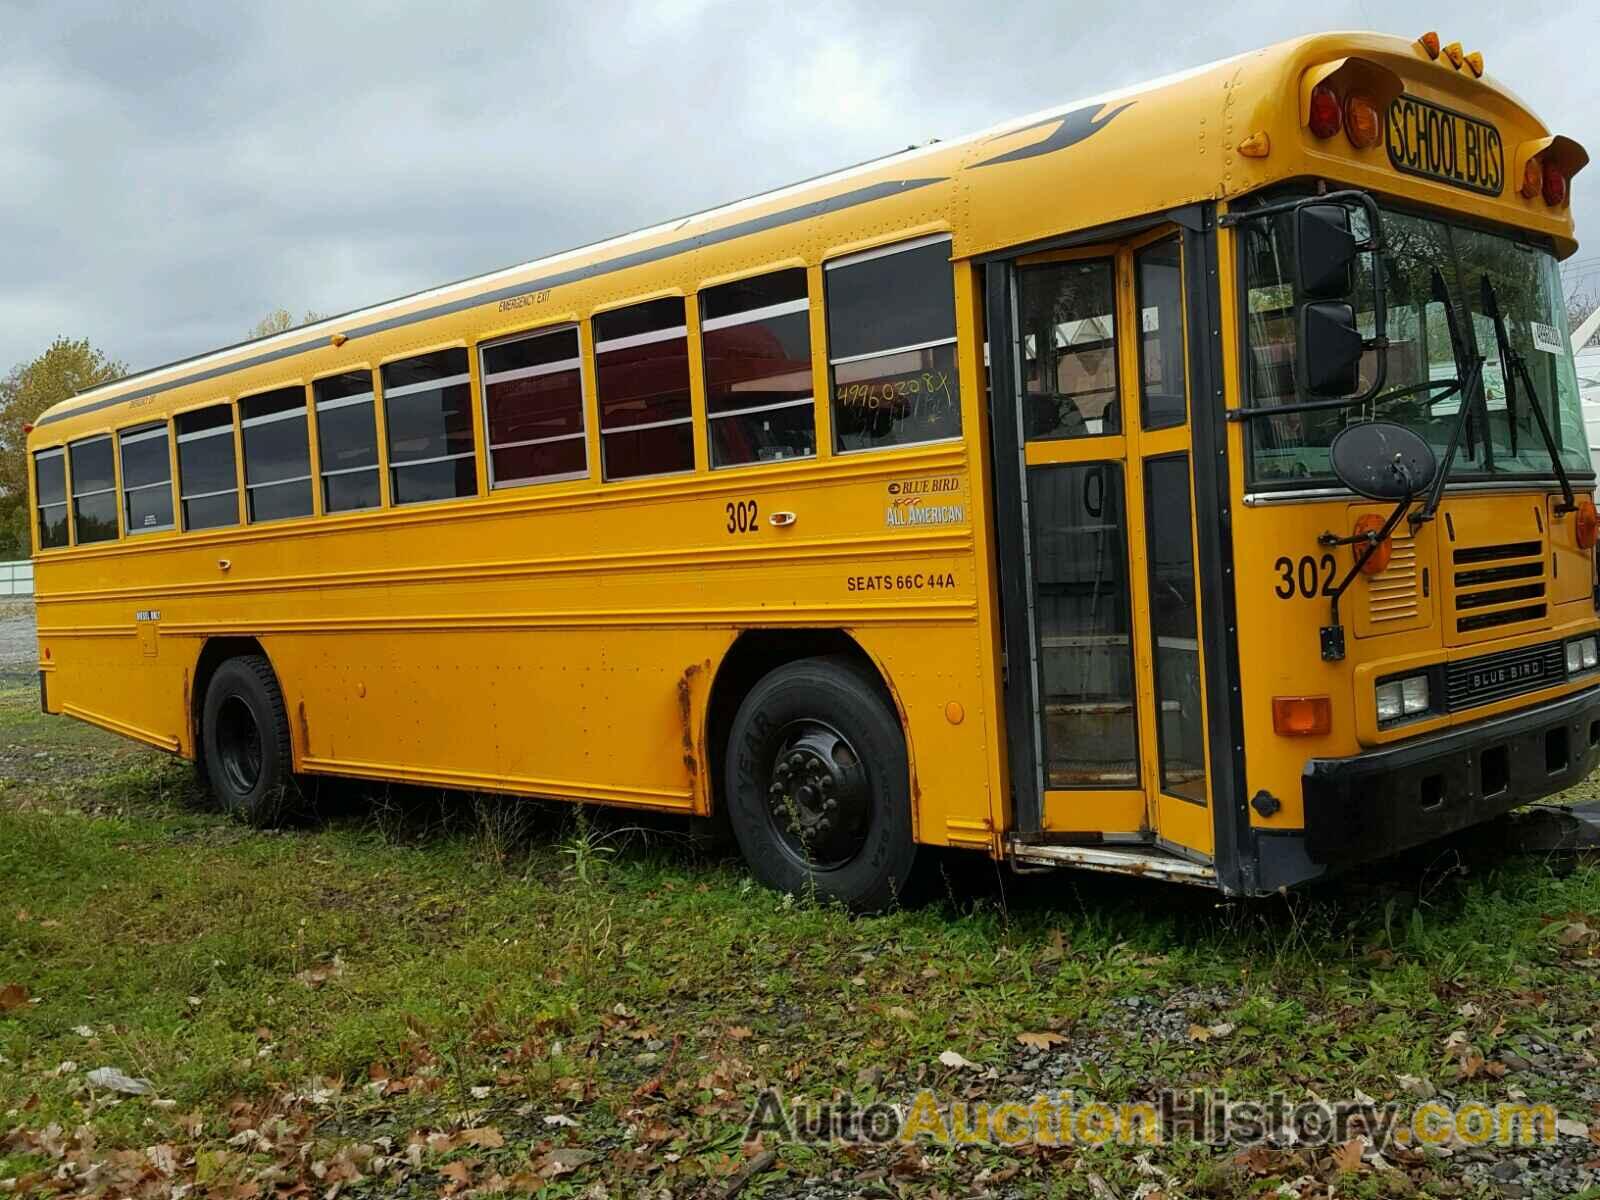 2007 BLUE BIRD SCHOOL BUS / TRANSIT BUS, 1BABGCPA17F242141